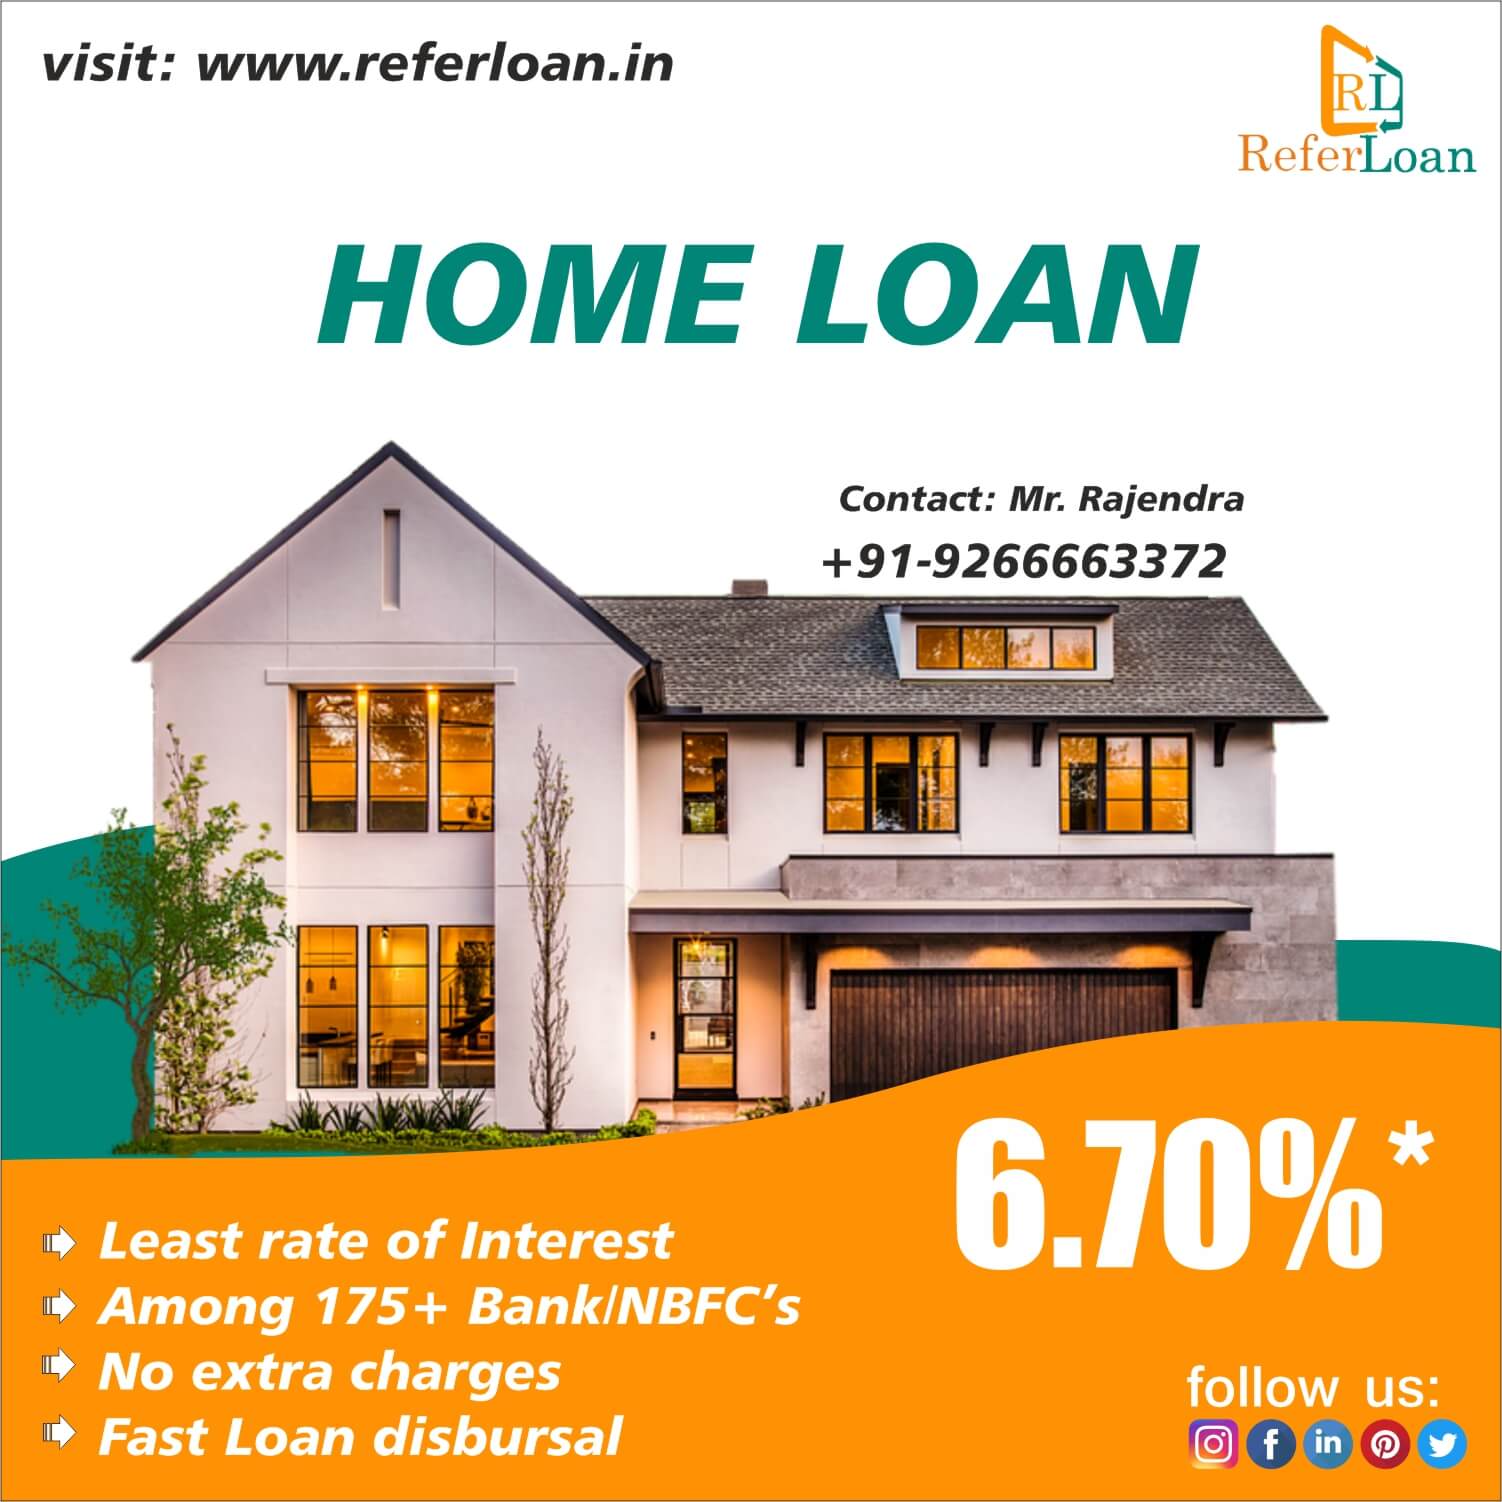 ReferLoan can be a good idea when you use it to reach a home loan goal.ServicesInvestment - Financial PlanningEast DelhiLaxmi Nagar